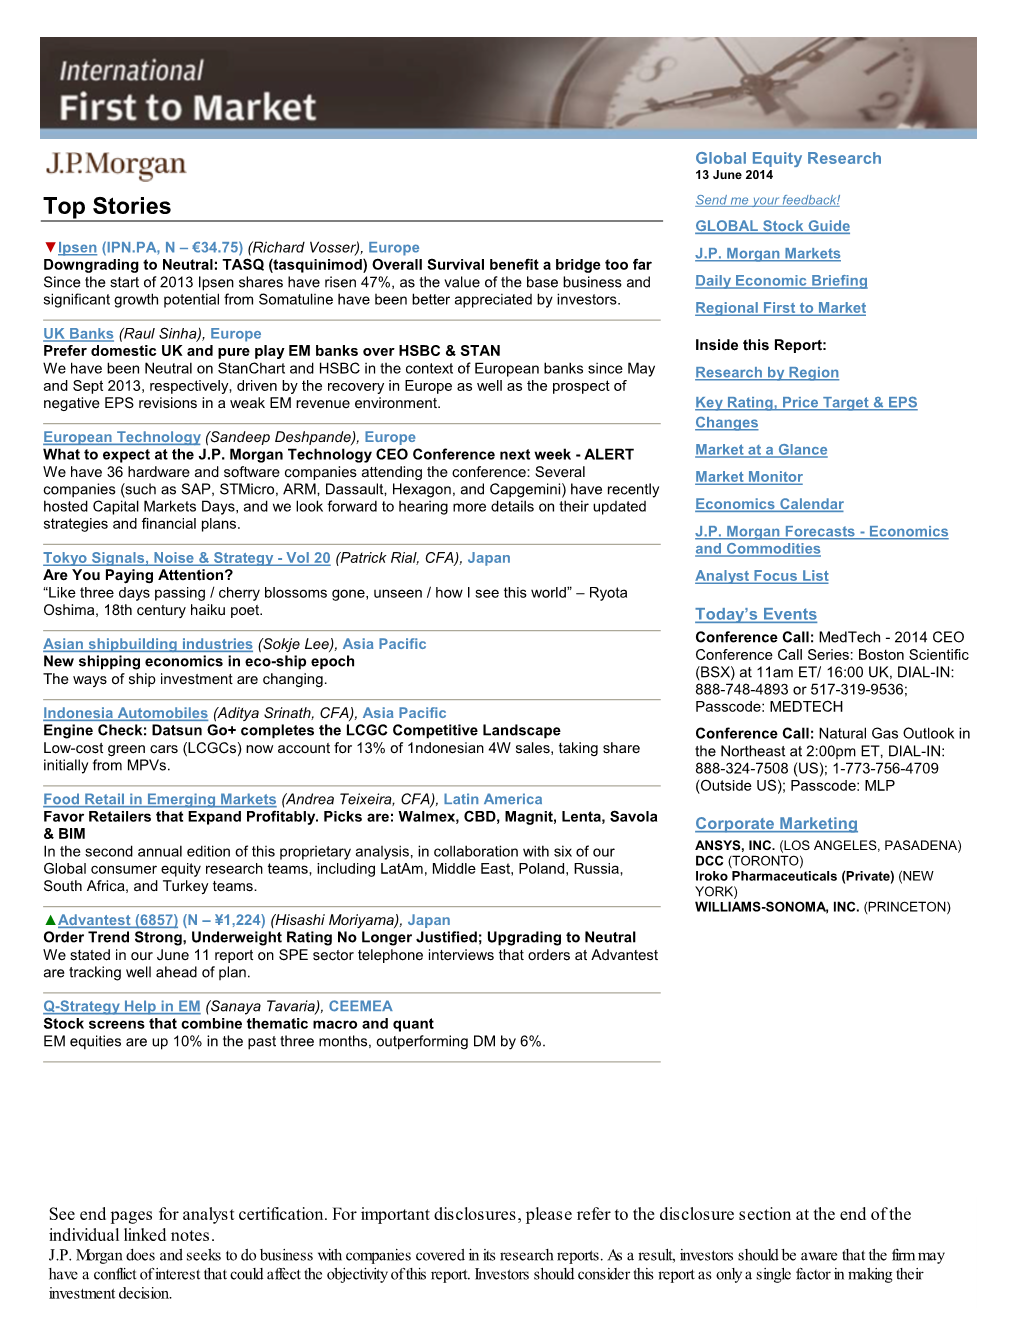 Top Stories Send Me Your Feedback! GLOBAL Stock Guide ▼Ipsen (IPN.PA, N – €34.75) (Richard Vosser), Europe J.P